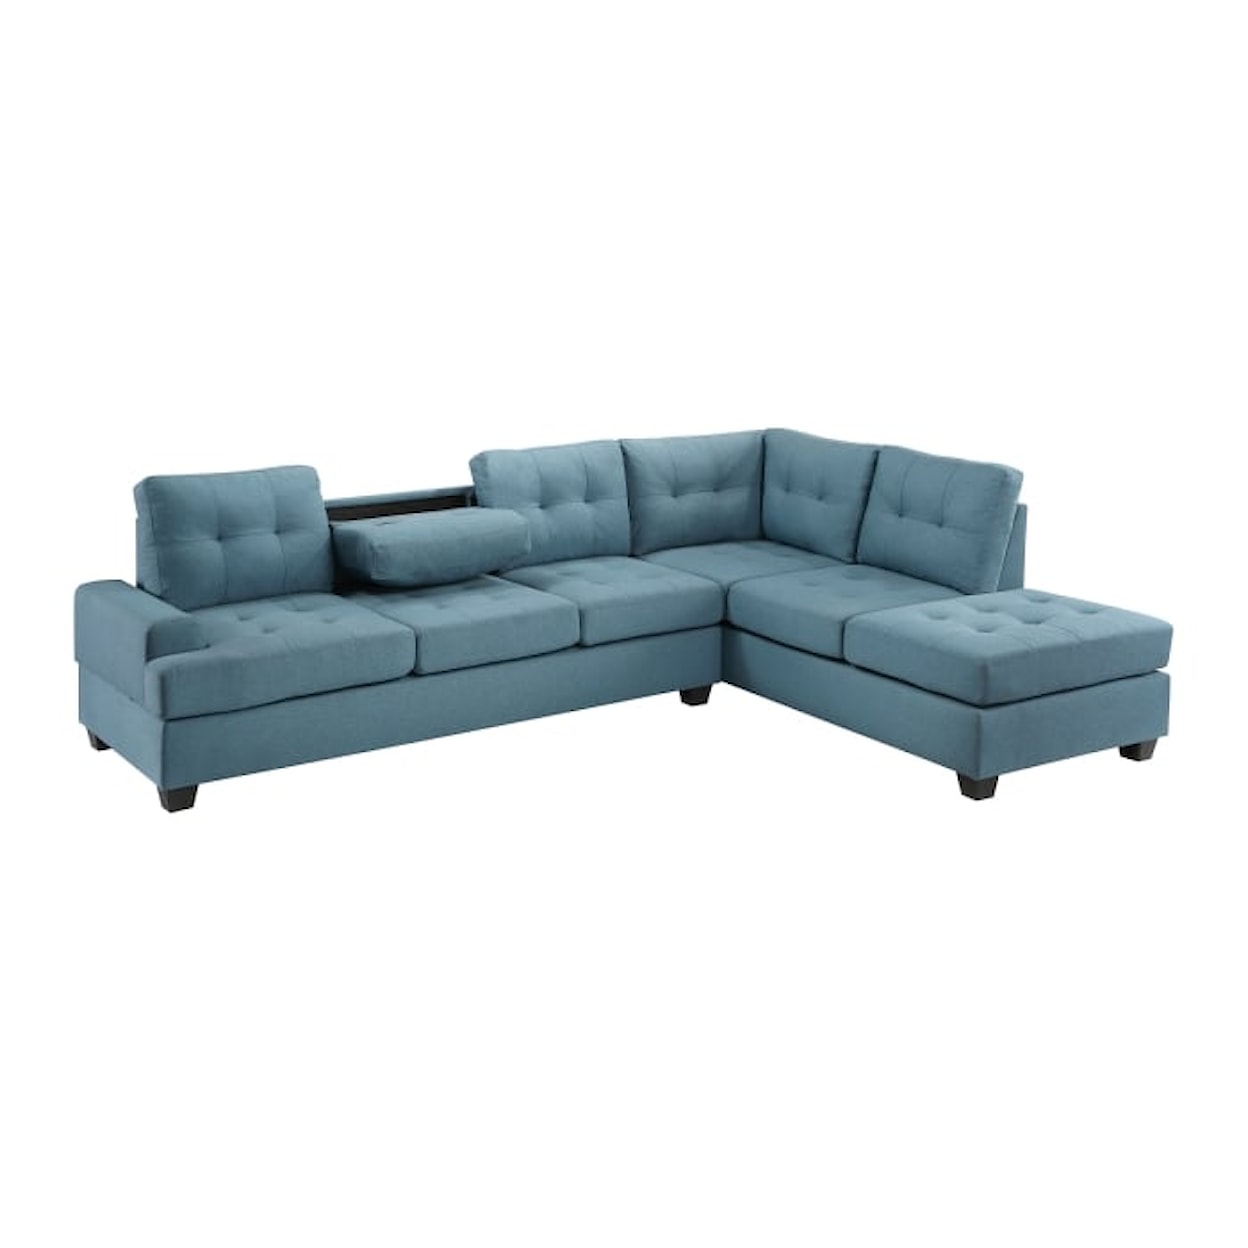 Homelegance Dunstan 2-Piece Reversible Sectional Sofa